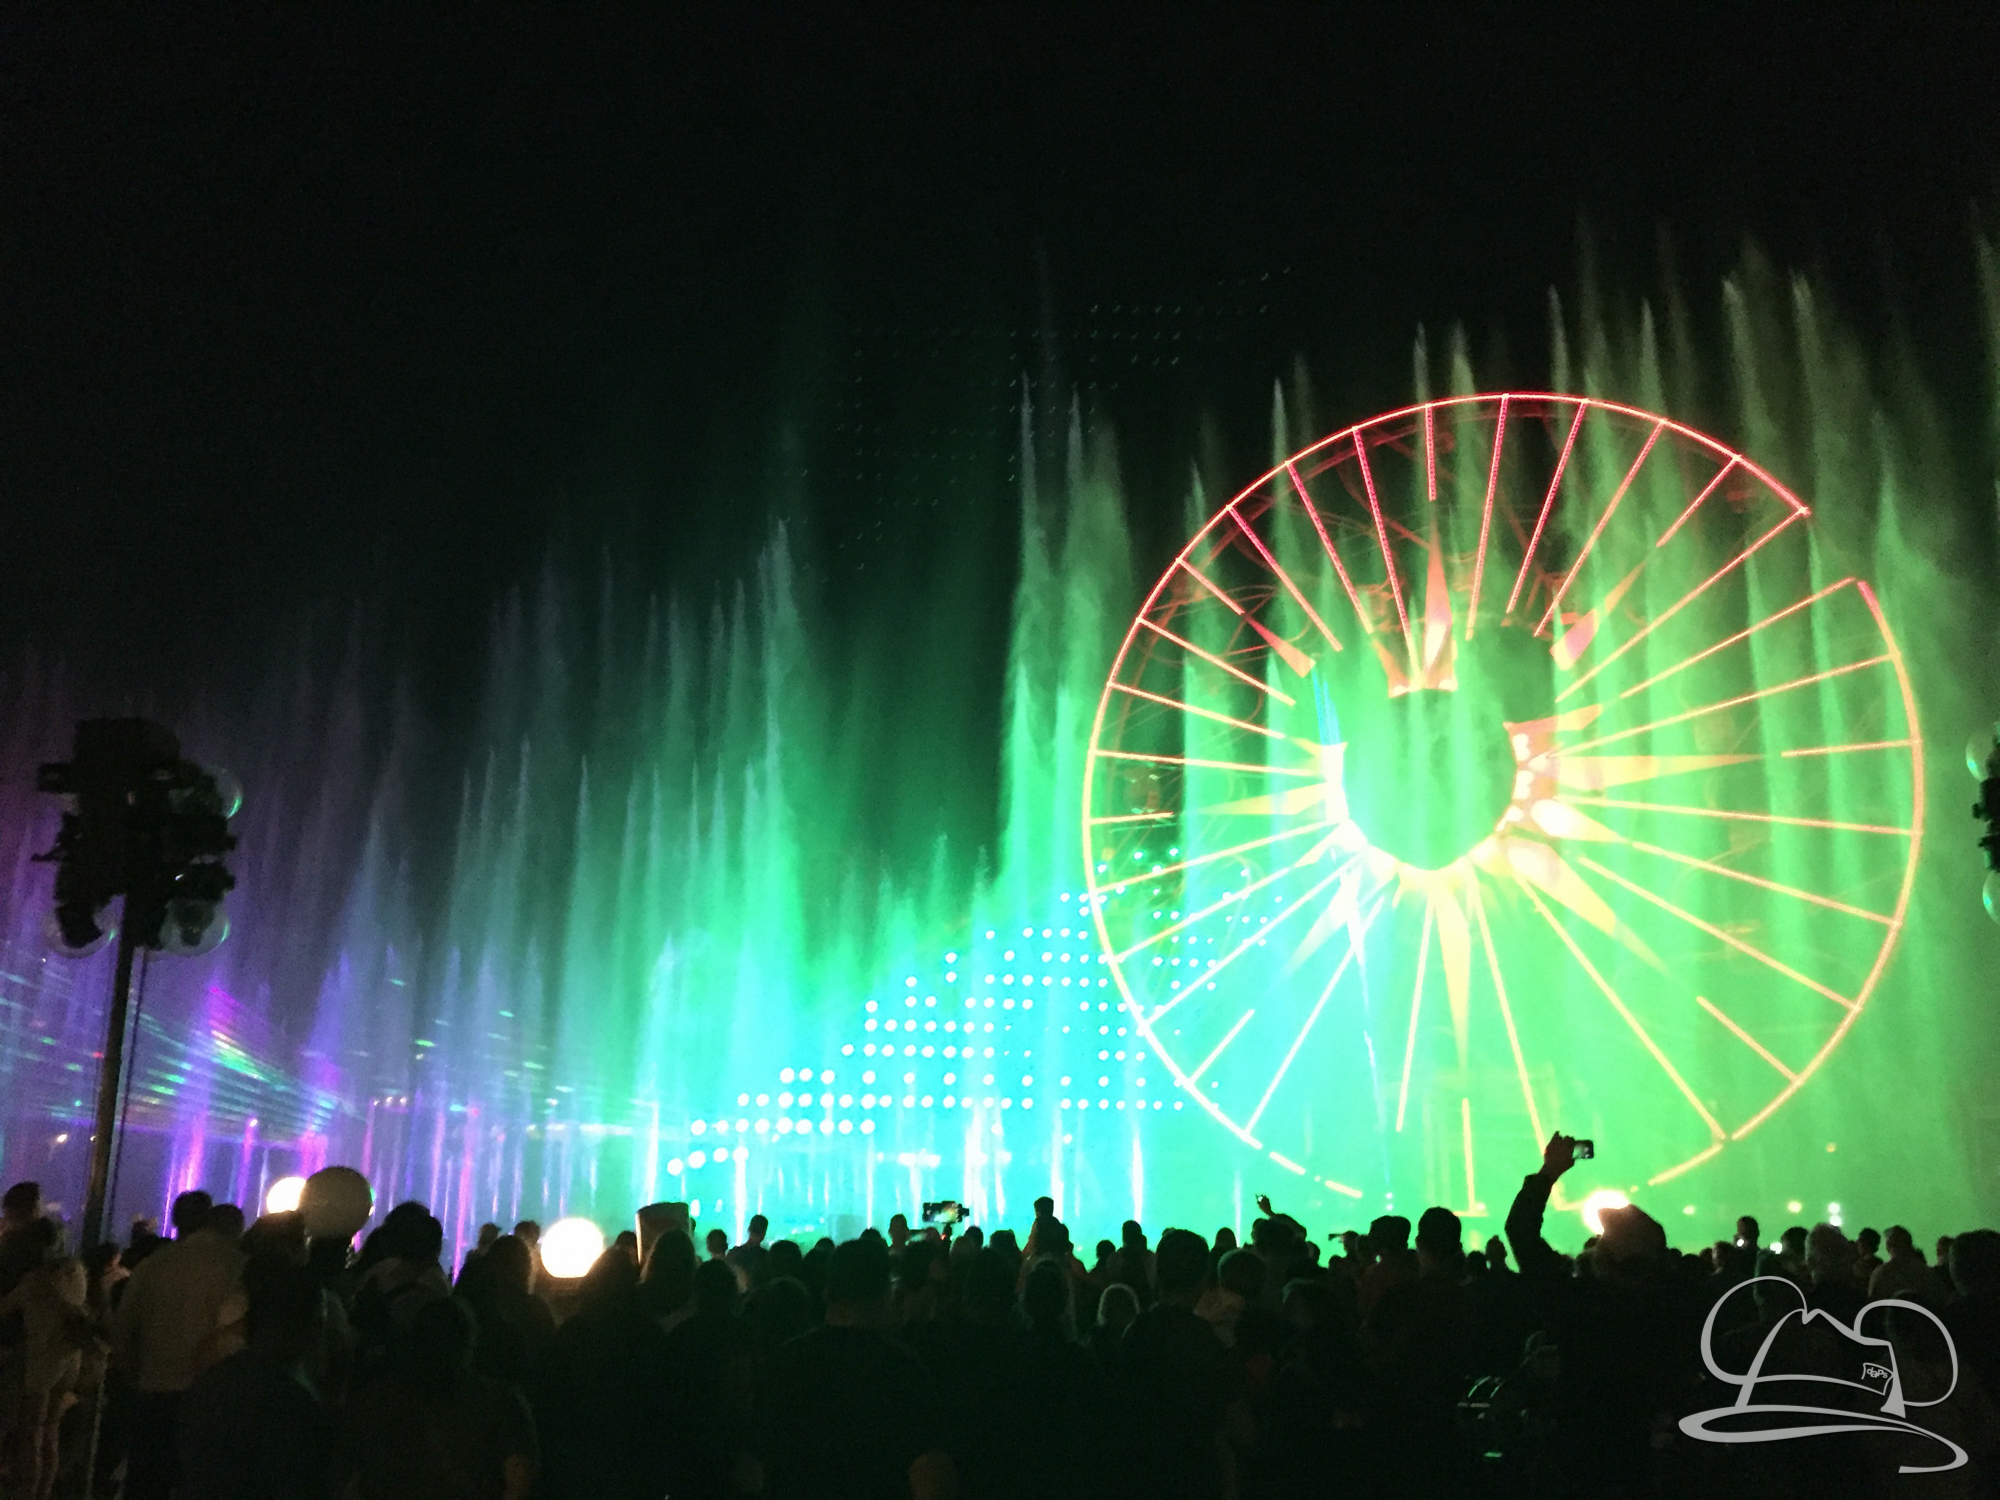 World of Color – Season of Light Brightens Up the Holidays at the Disneyland Resort